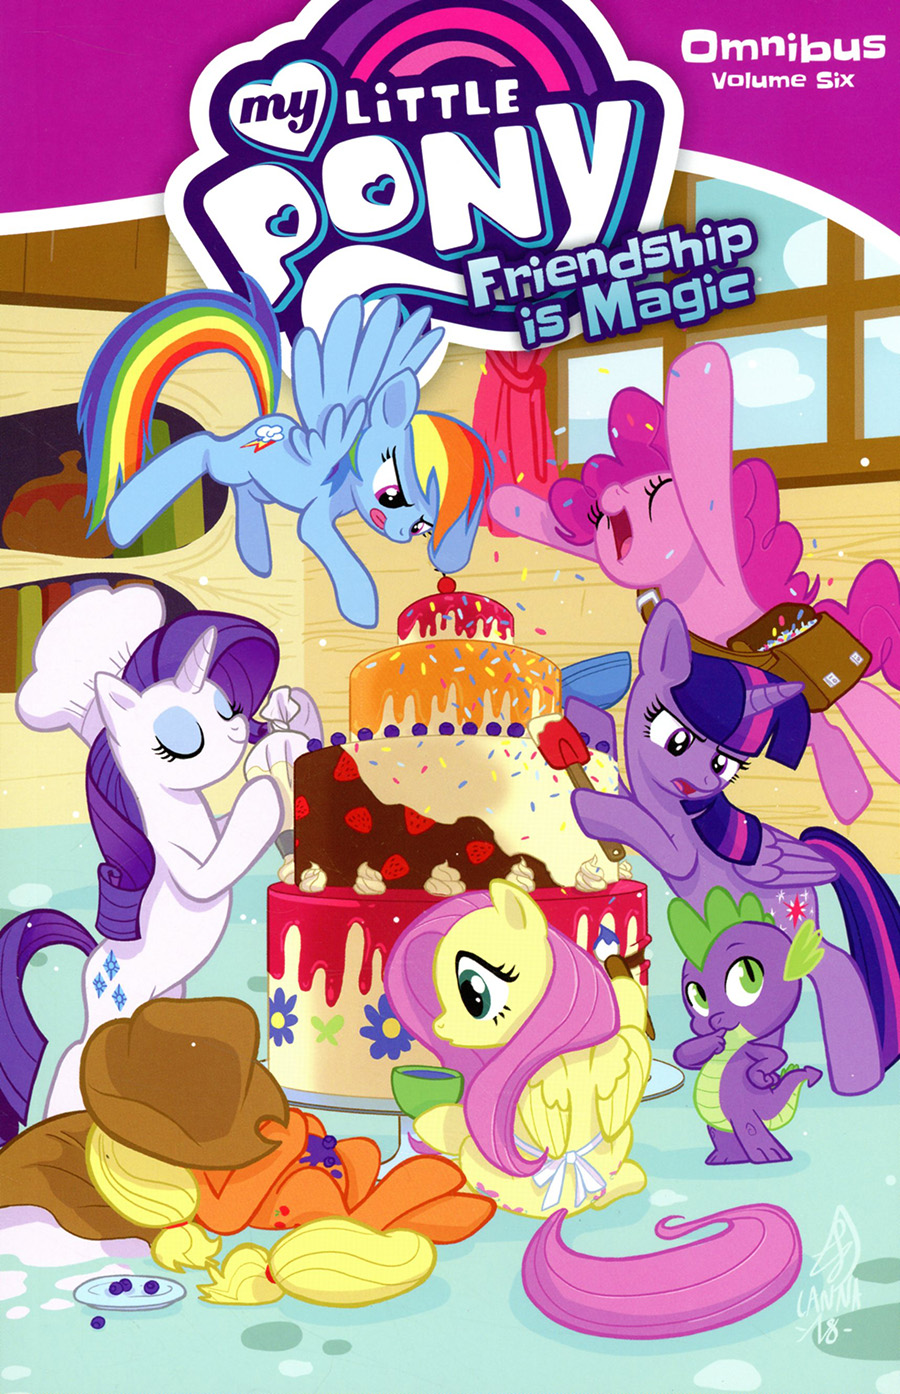 My Little Pony Friendship Is Magic Omnibus Vol 6 TP